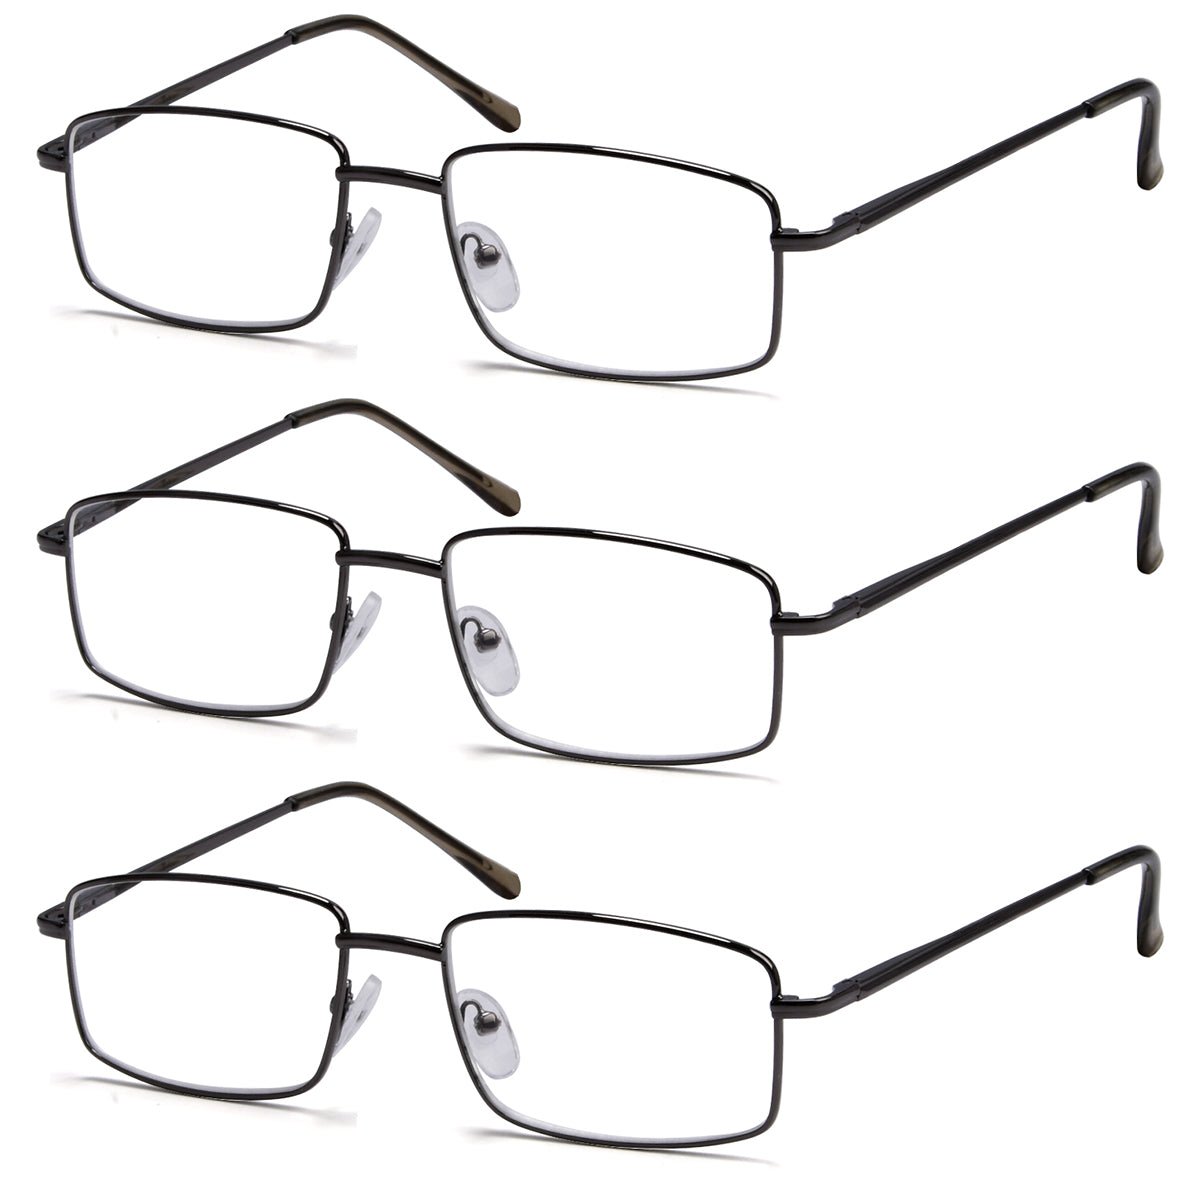 3 Pack Classic Metal Frame Reading Glasses R15023eyekeeper.com